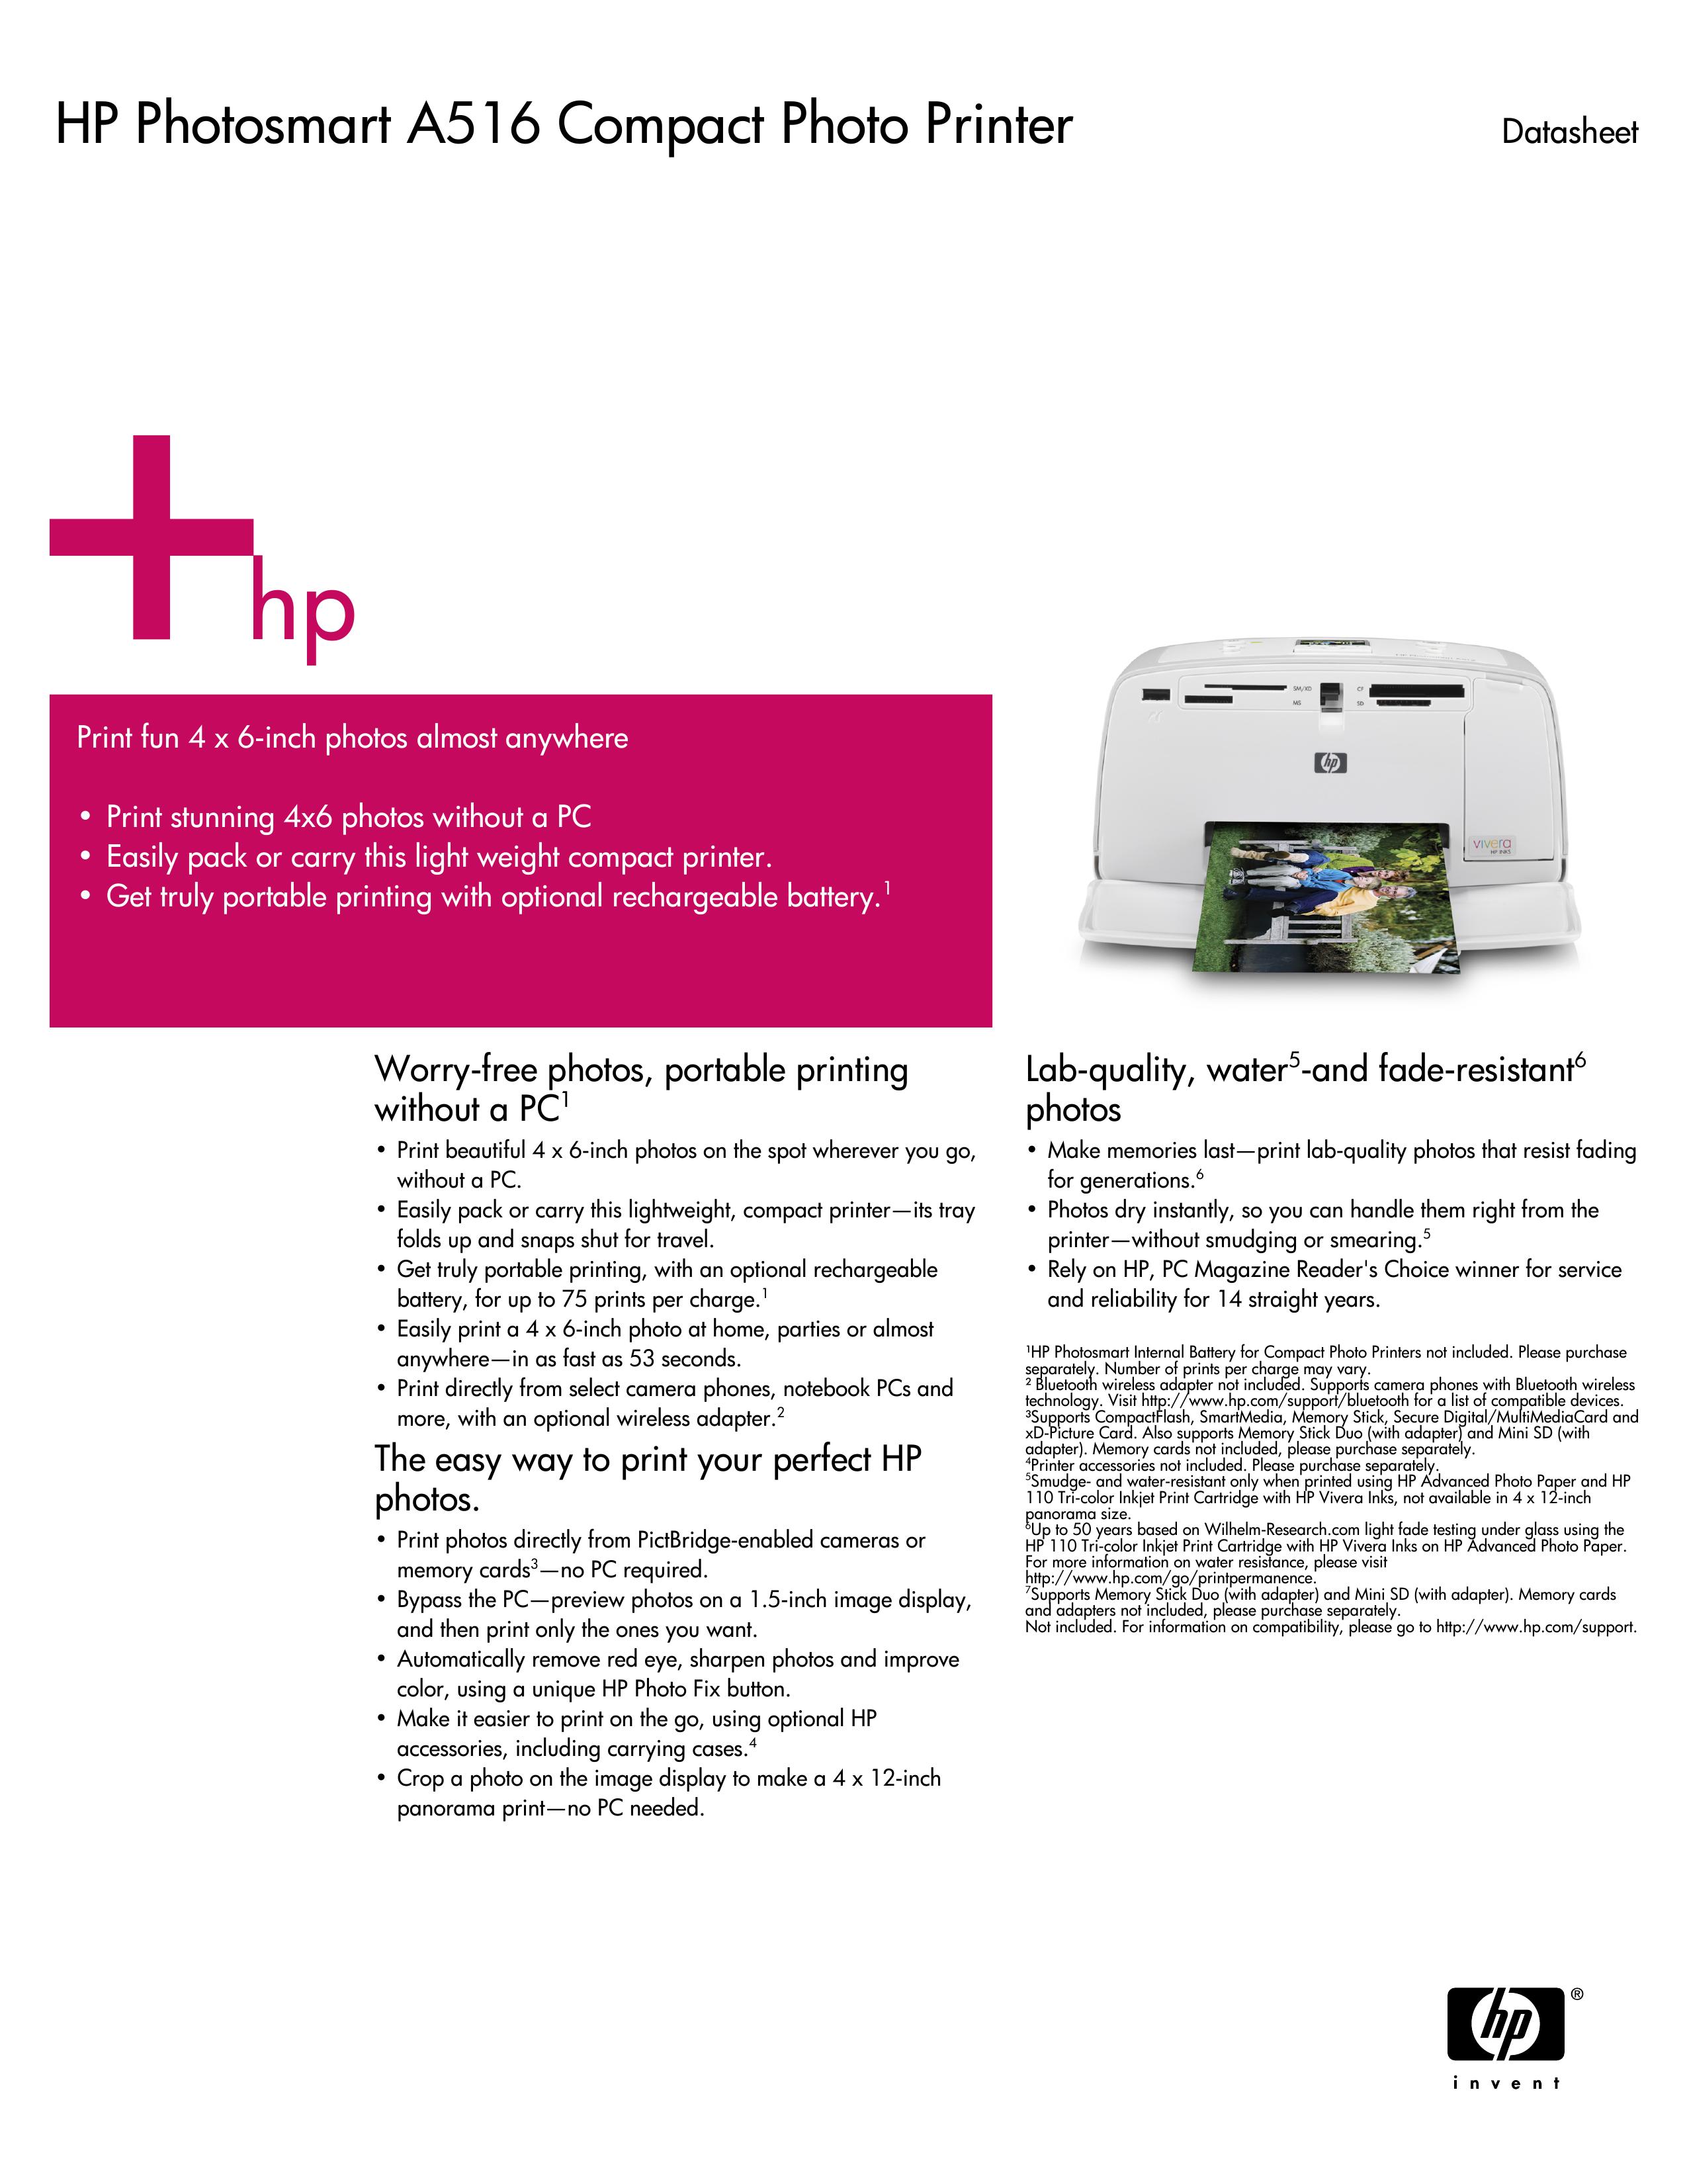 HP (Hewlett-Packard) A516 Photo Printer User Manual